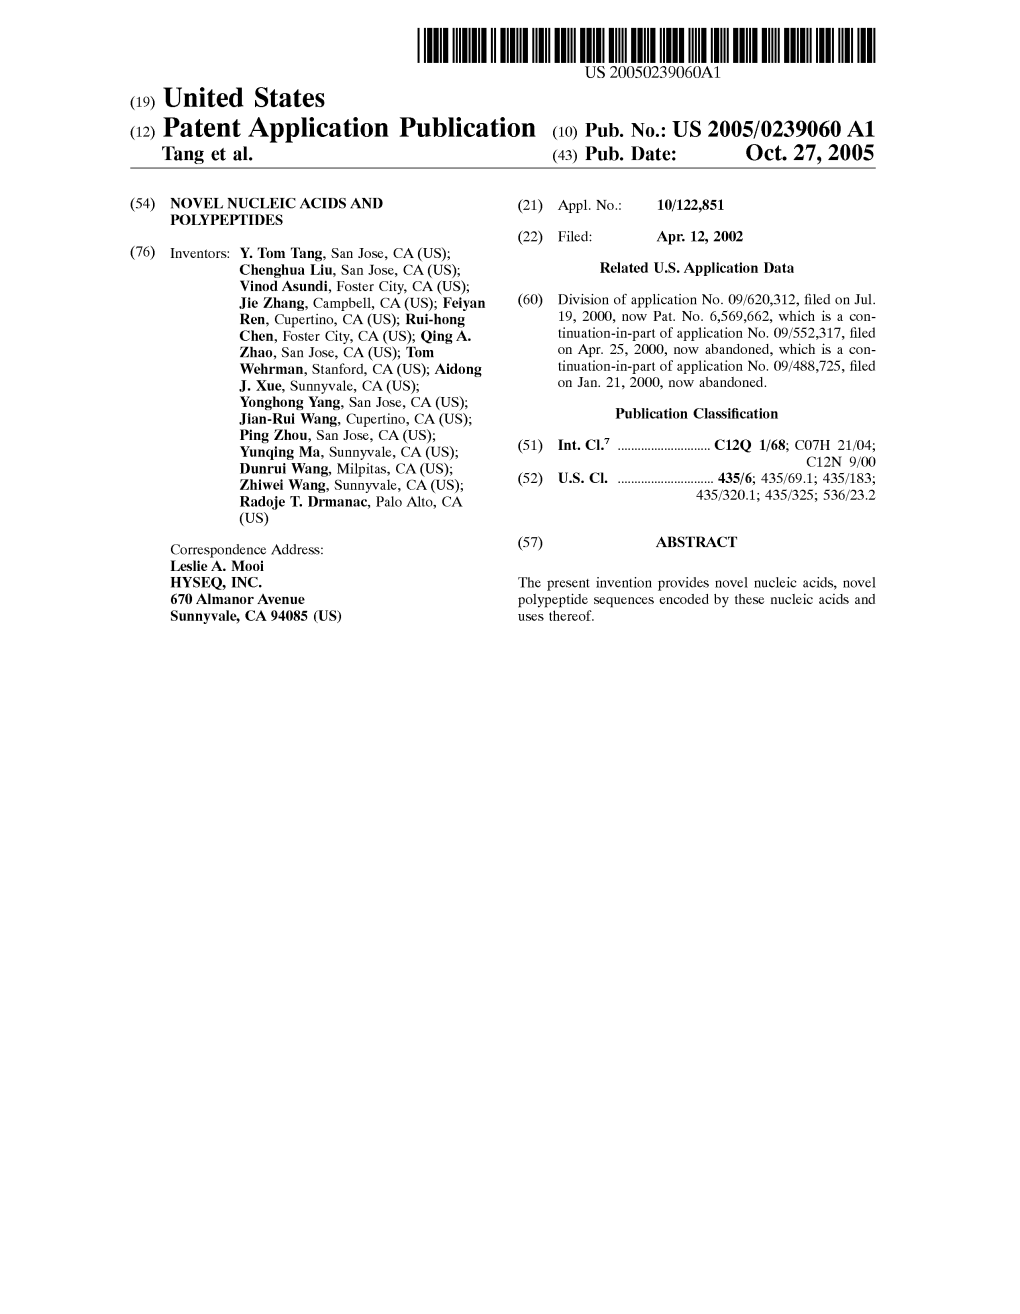 (12) Patent Application Publication (10) Pub. No.: US 2005/0239060A1 Tang Et Al